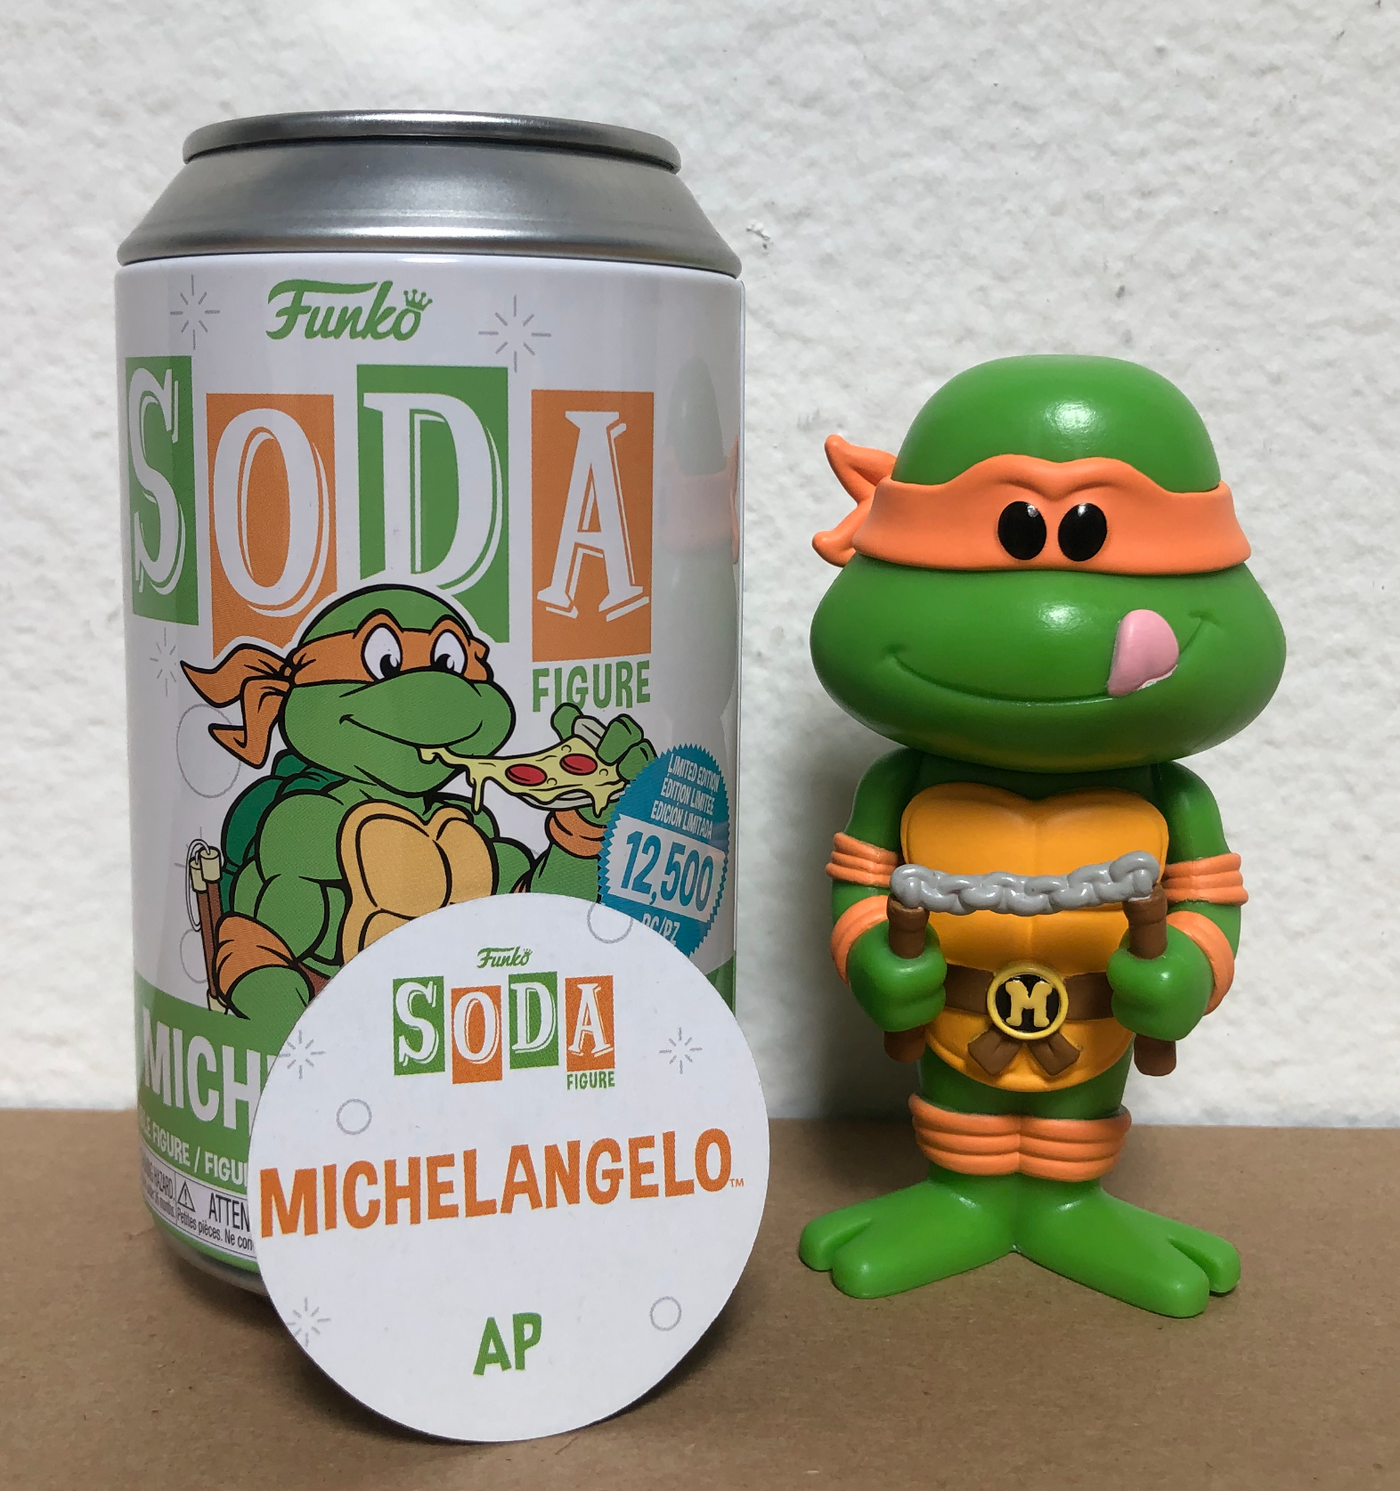 Funko Soda TMNT Michelangelo Artist Proof AP Common